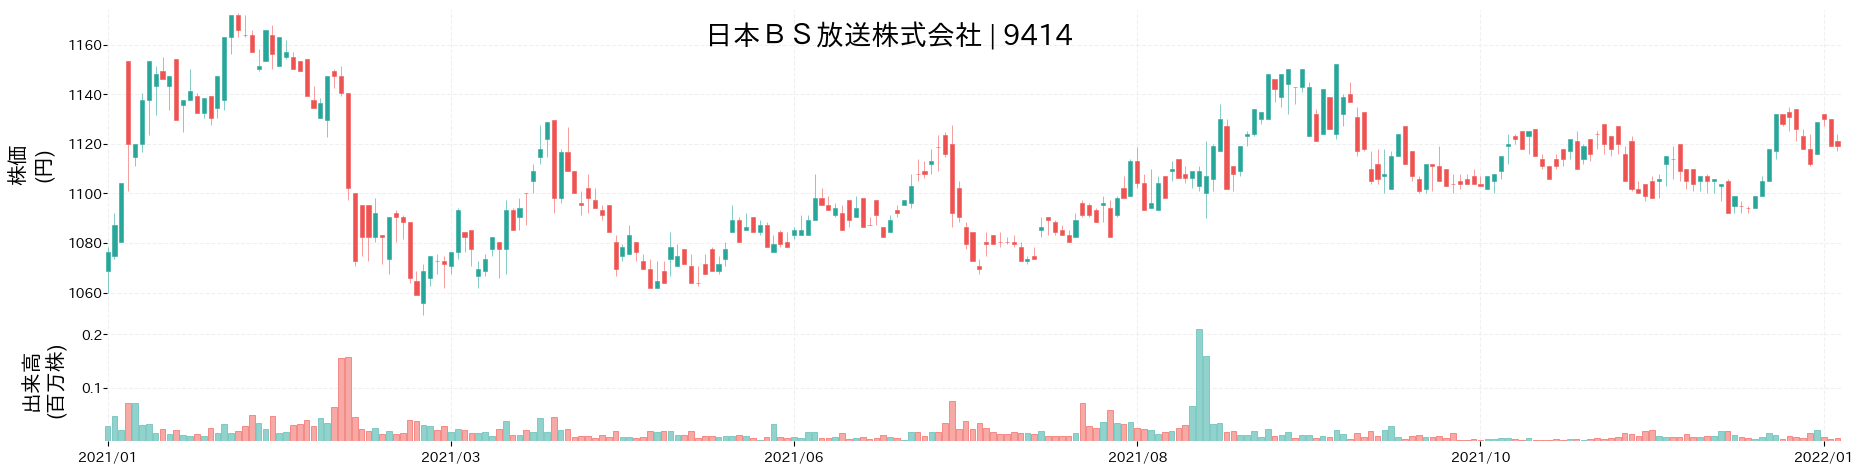 日本BS放送の株価推移(2021)